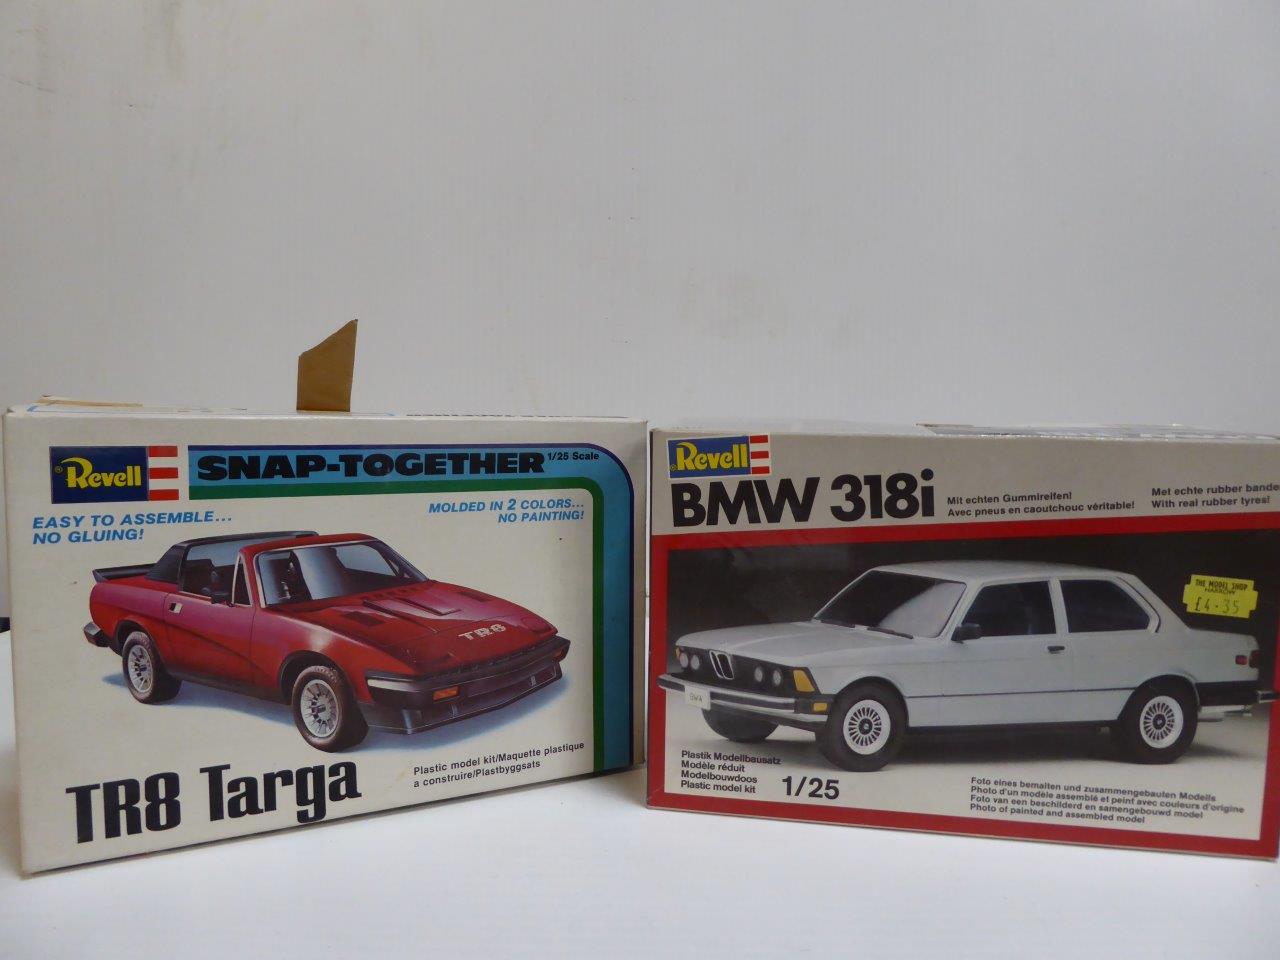 TR8 Targa and a BMW 318i